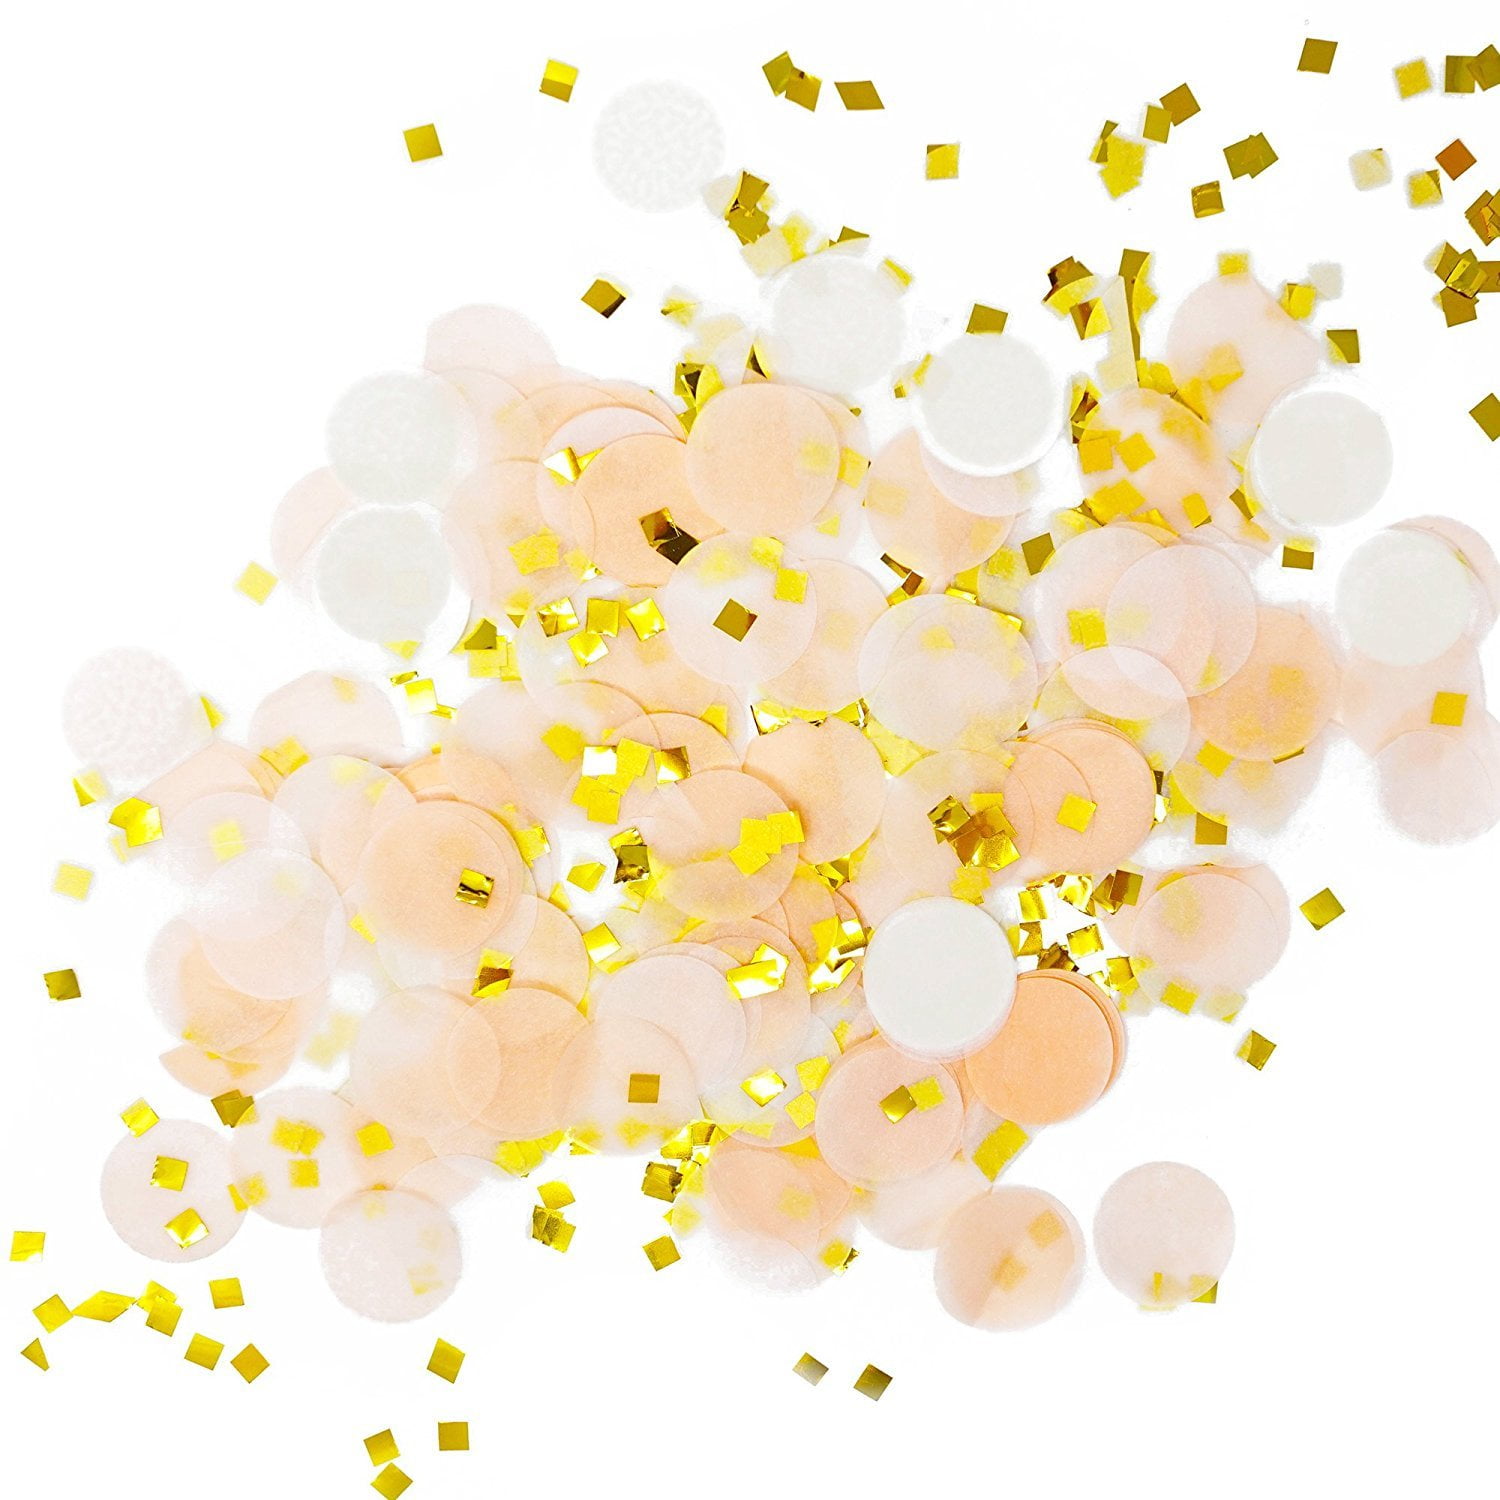 Golden Yellow and White Tissue Flowers Wedding Confetti Celebration Decoration 